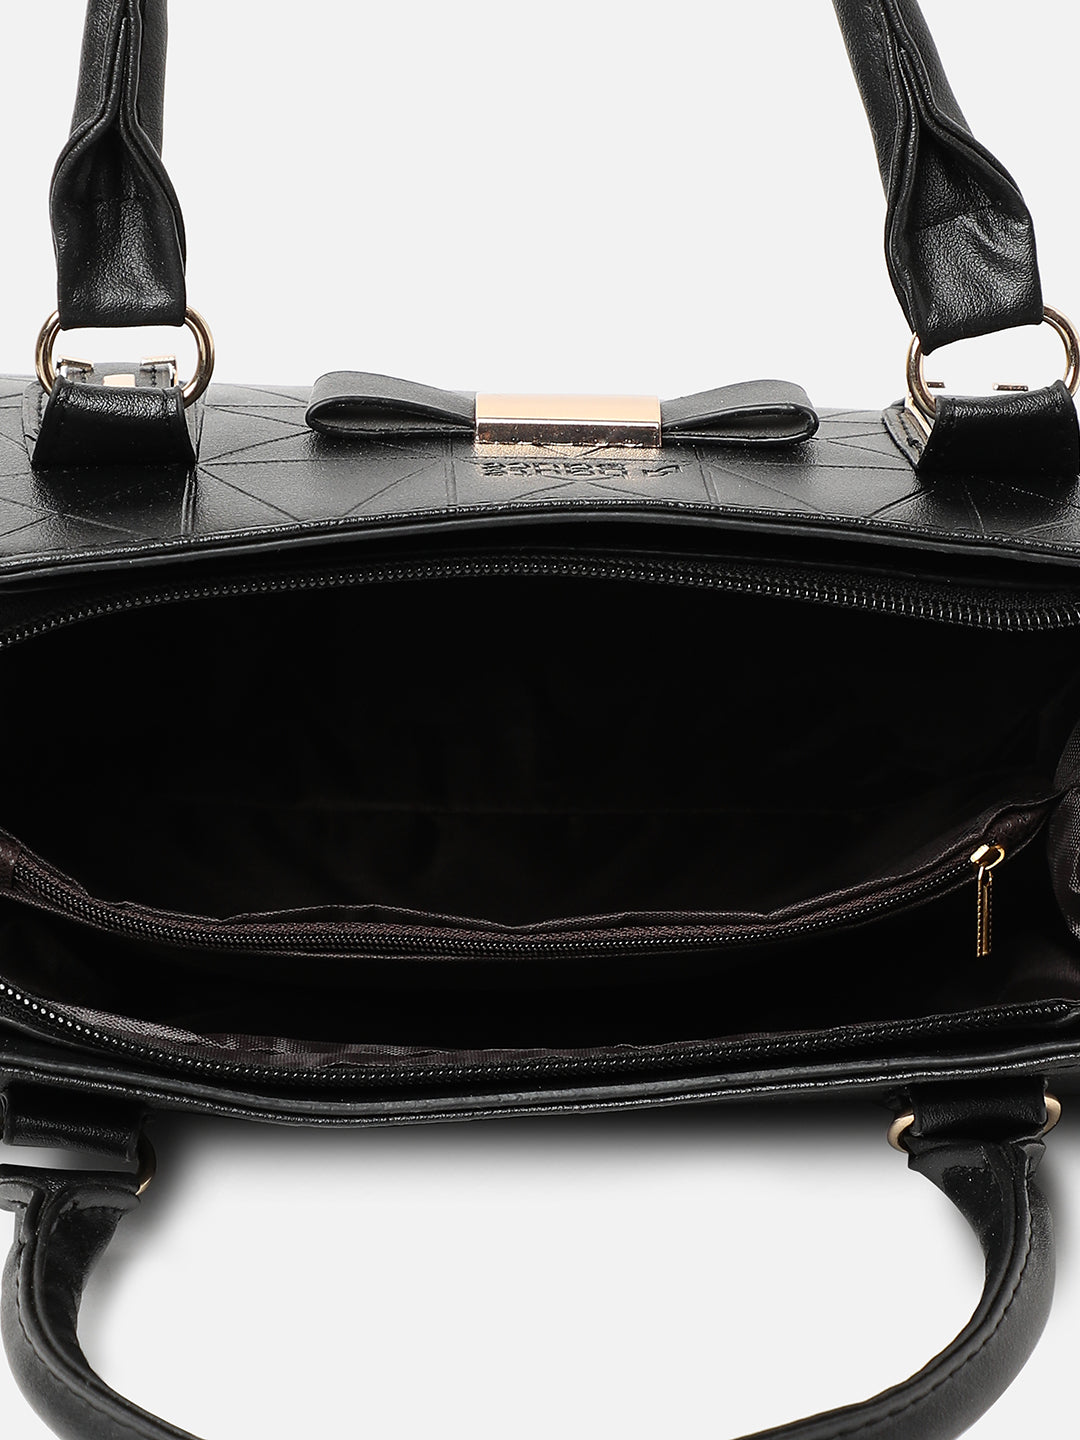 Onyx Textured Black Handbag